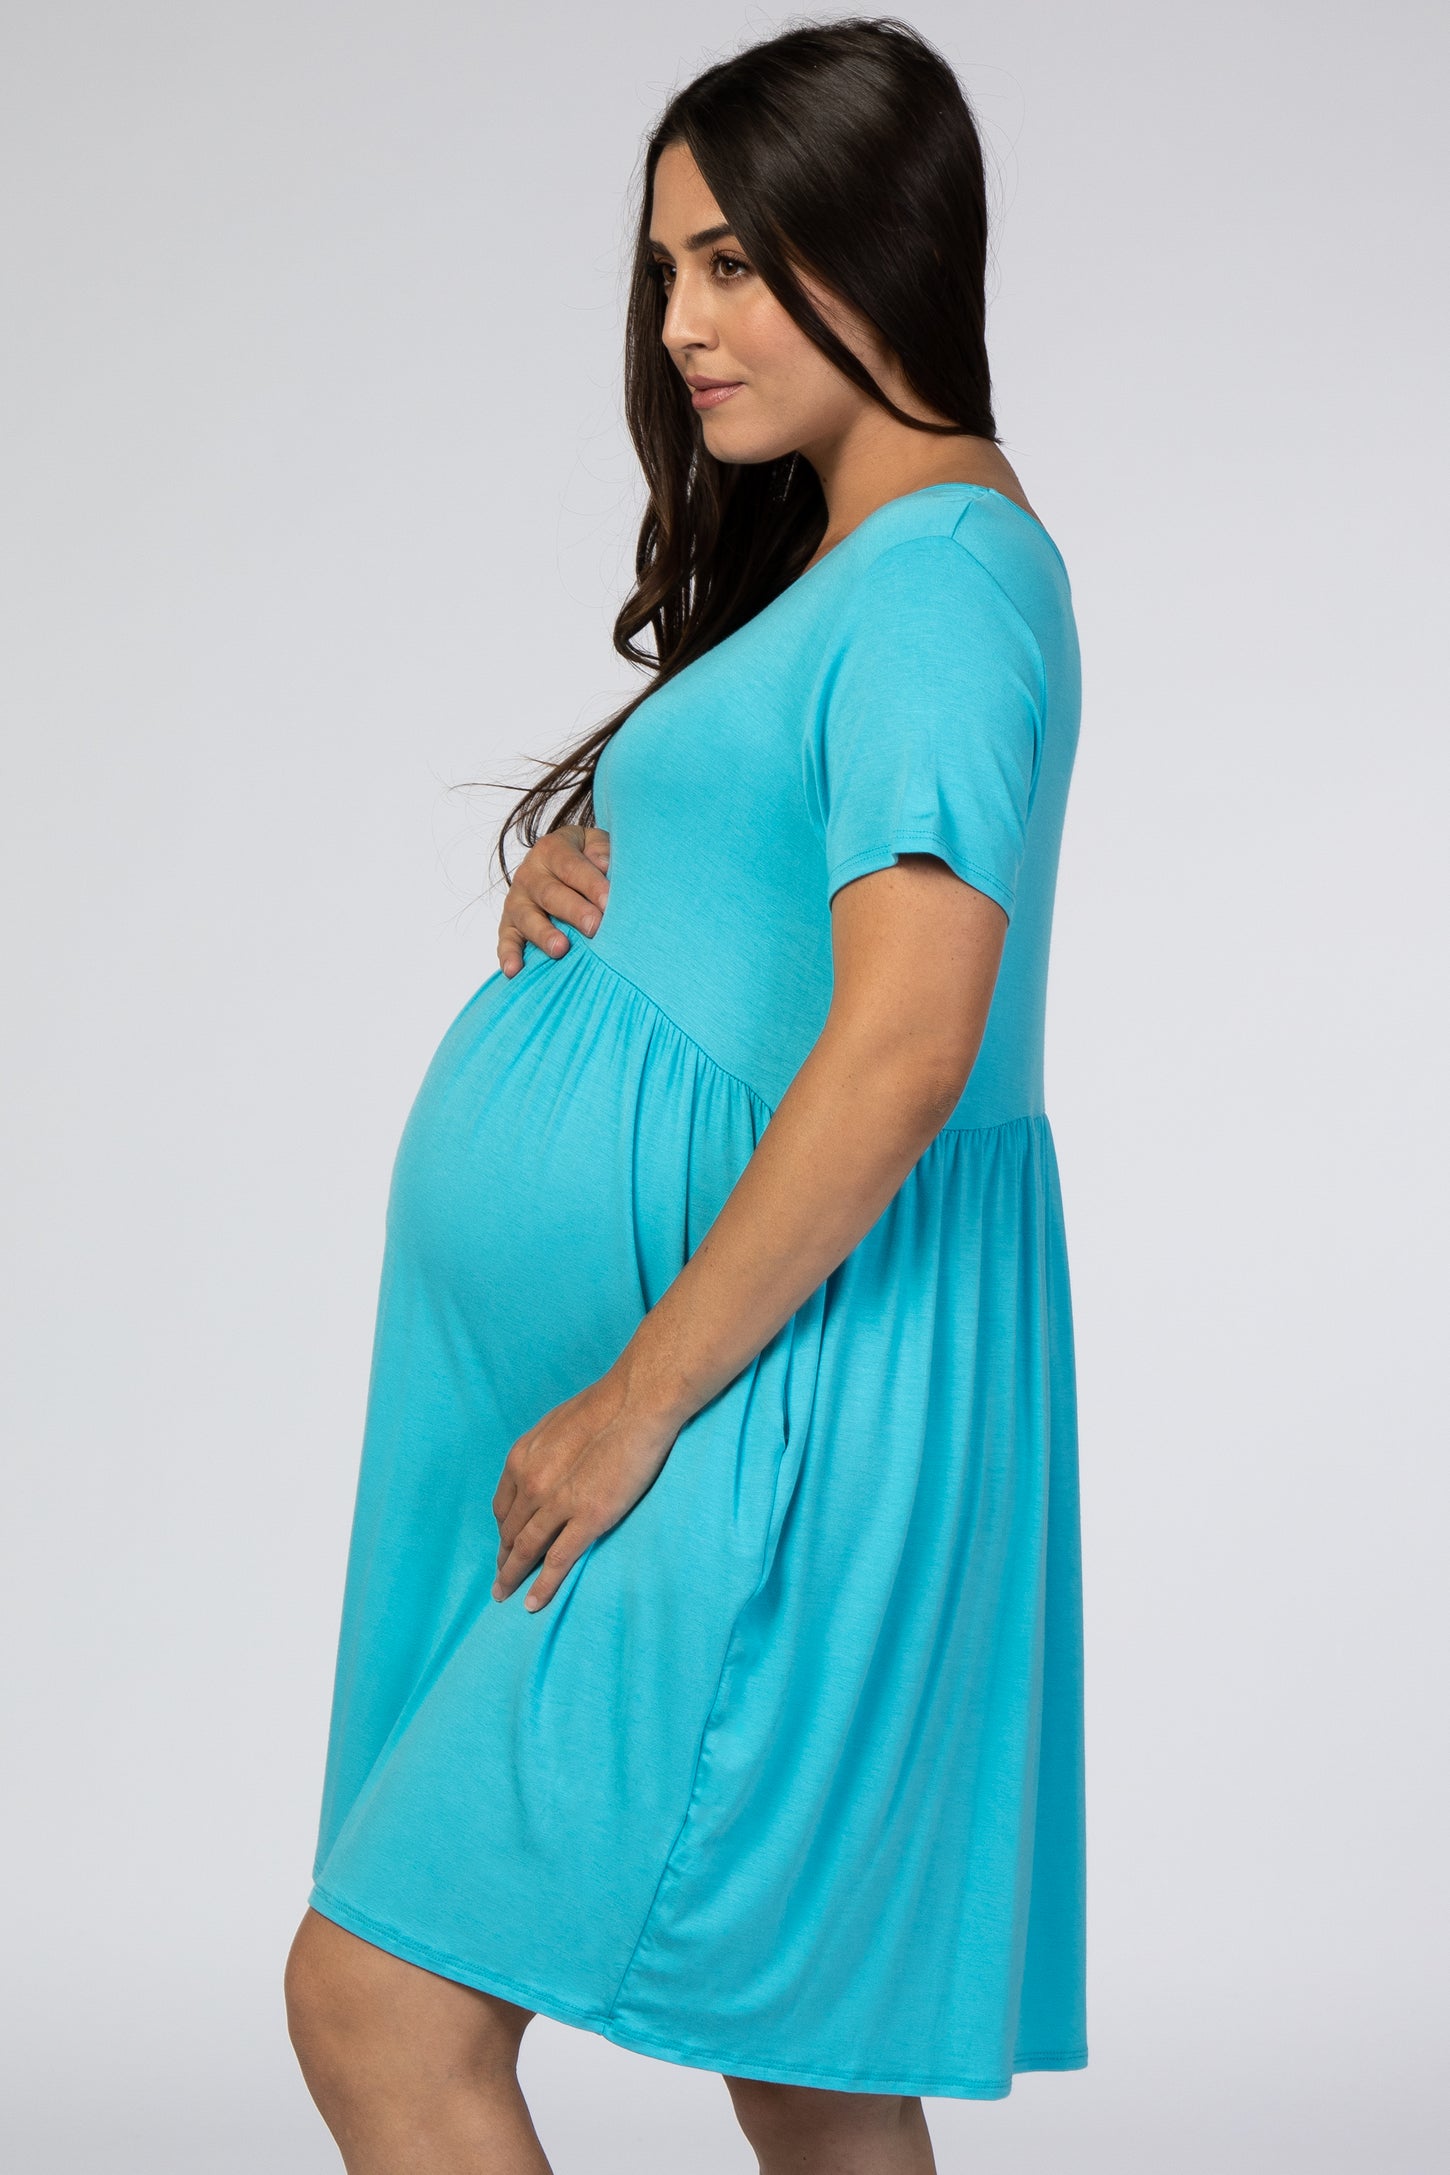 Blue Short Sleeve Babydoll Maternity Dress